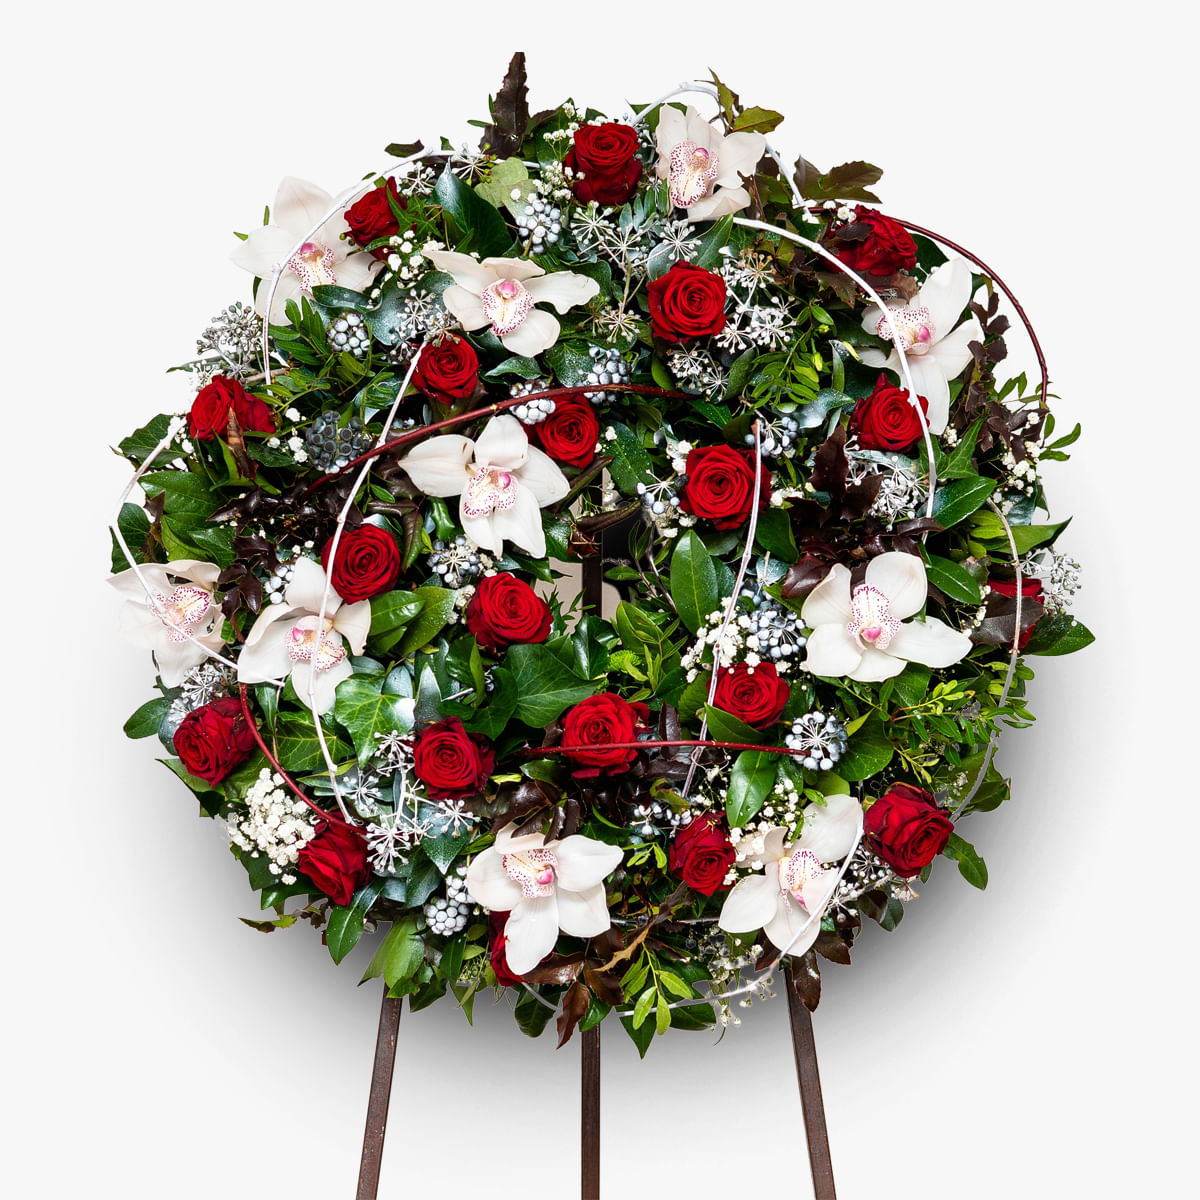 Coroana funerara cu trandafiri rosii si orhidee Coroana